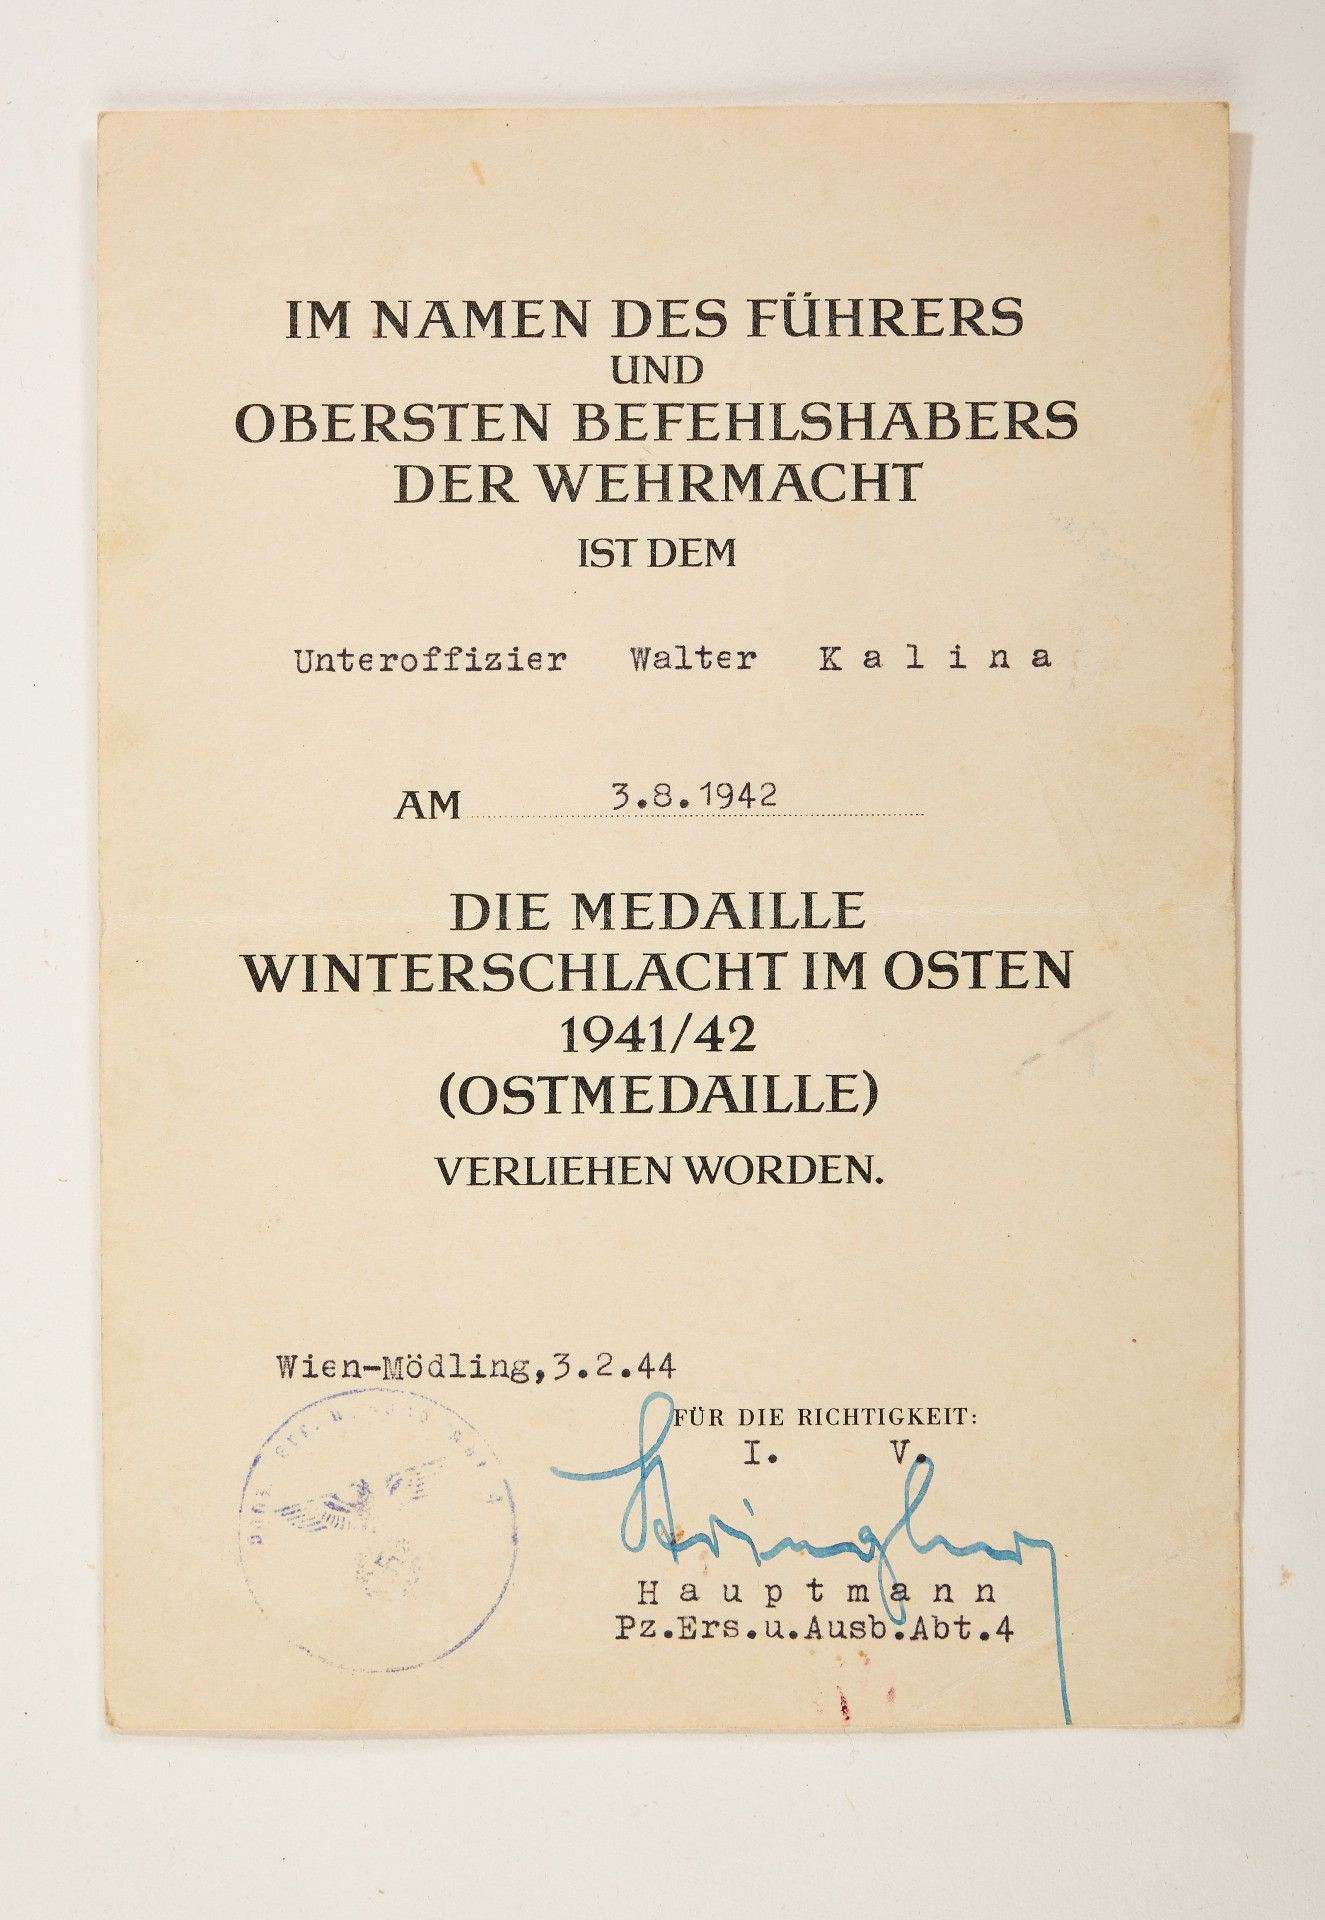 1933-1945: Dokumentennachlass des Unteroffiziers Walter Kalina, 8./Pz.Rgt.4 - Image 5 of 6